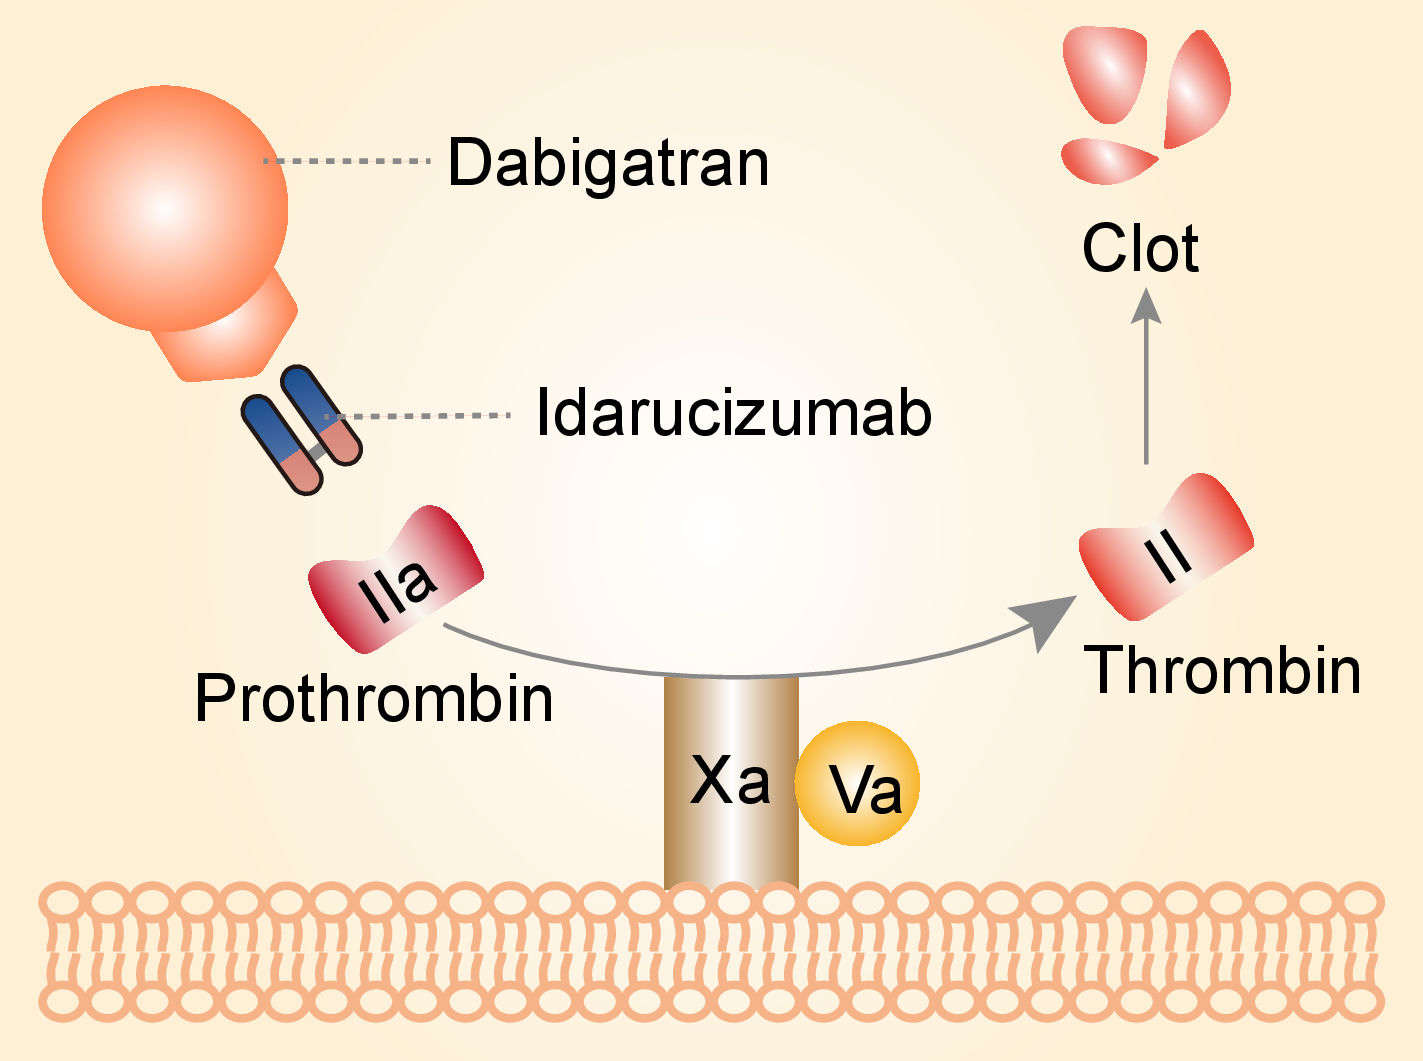 Mechanism of action of Idarucizumab